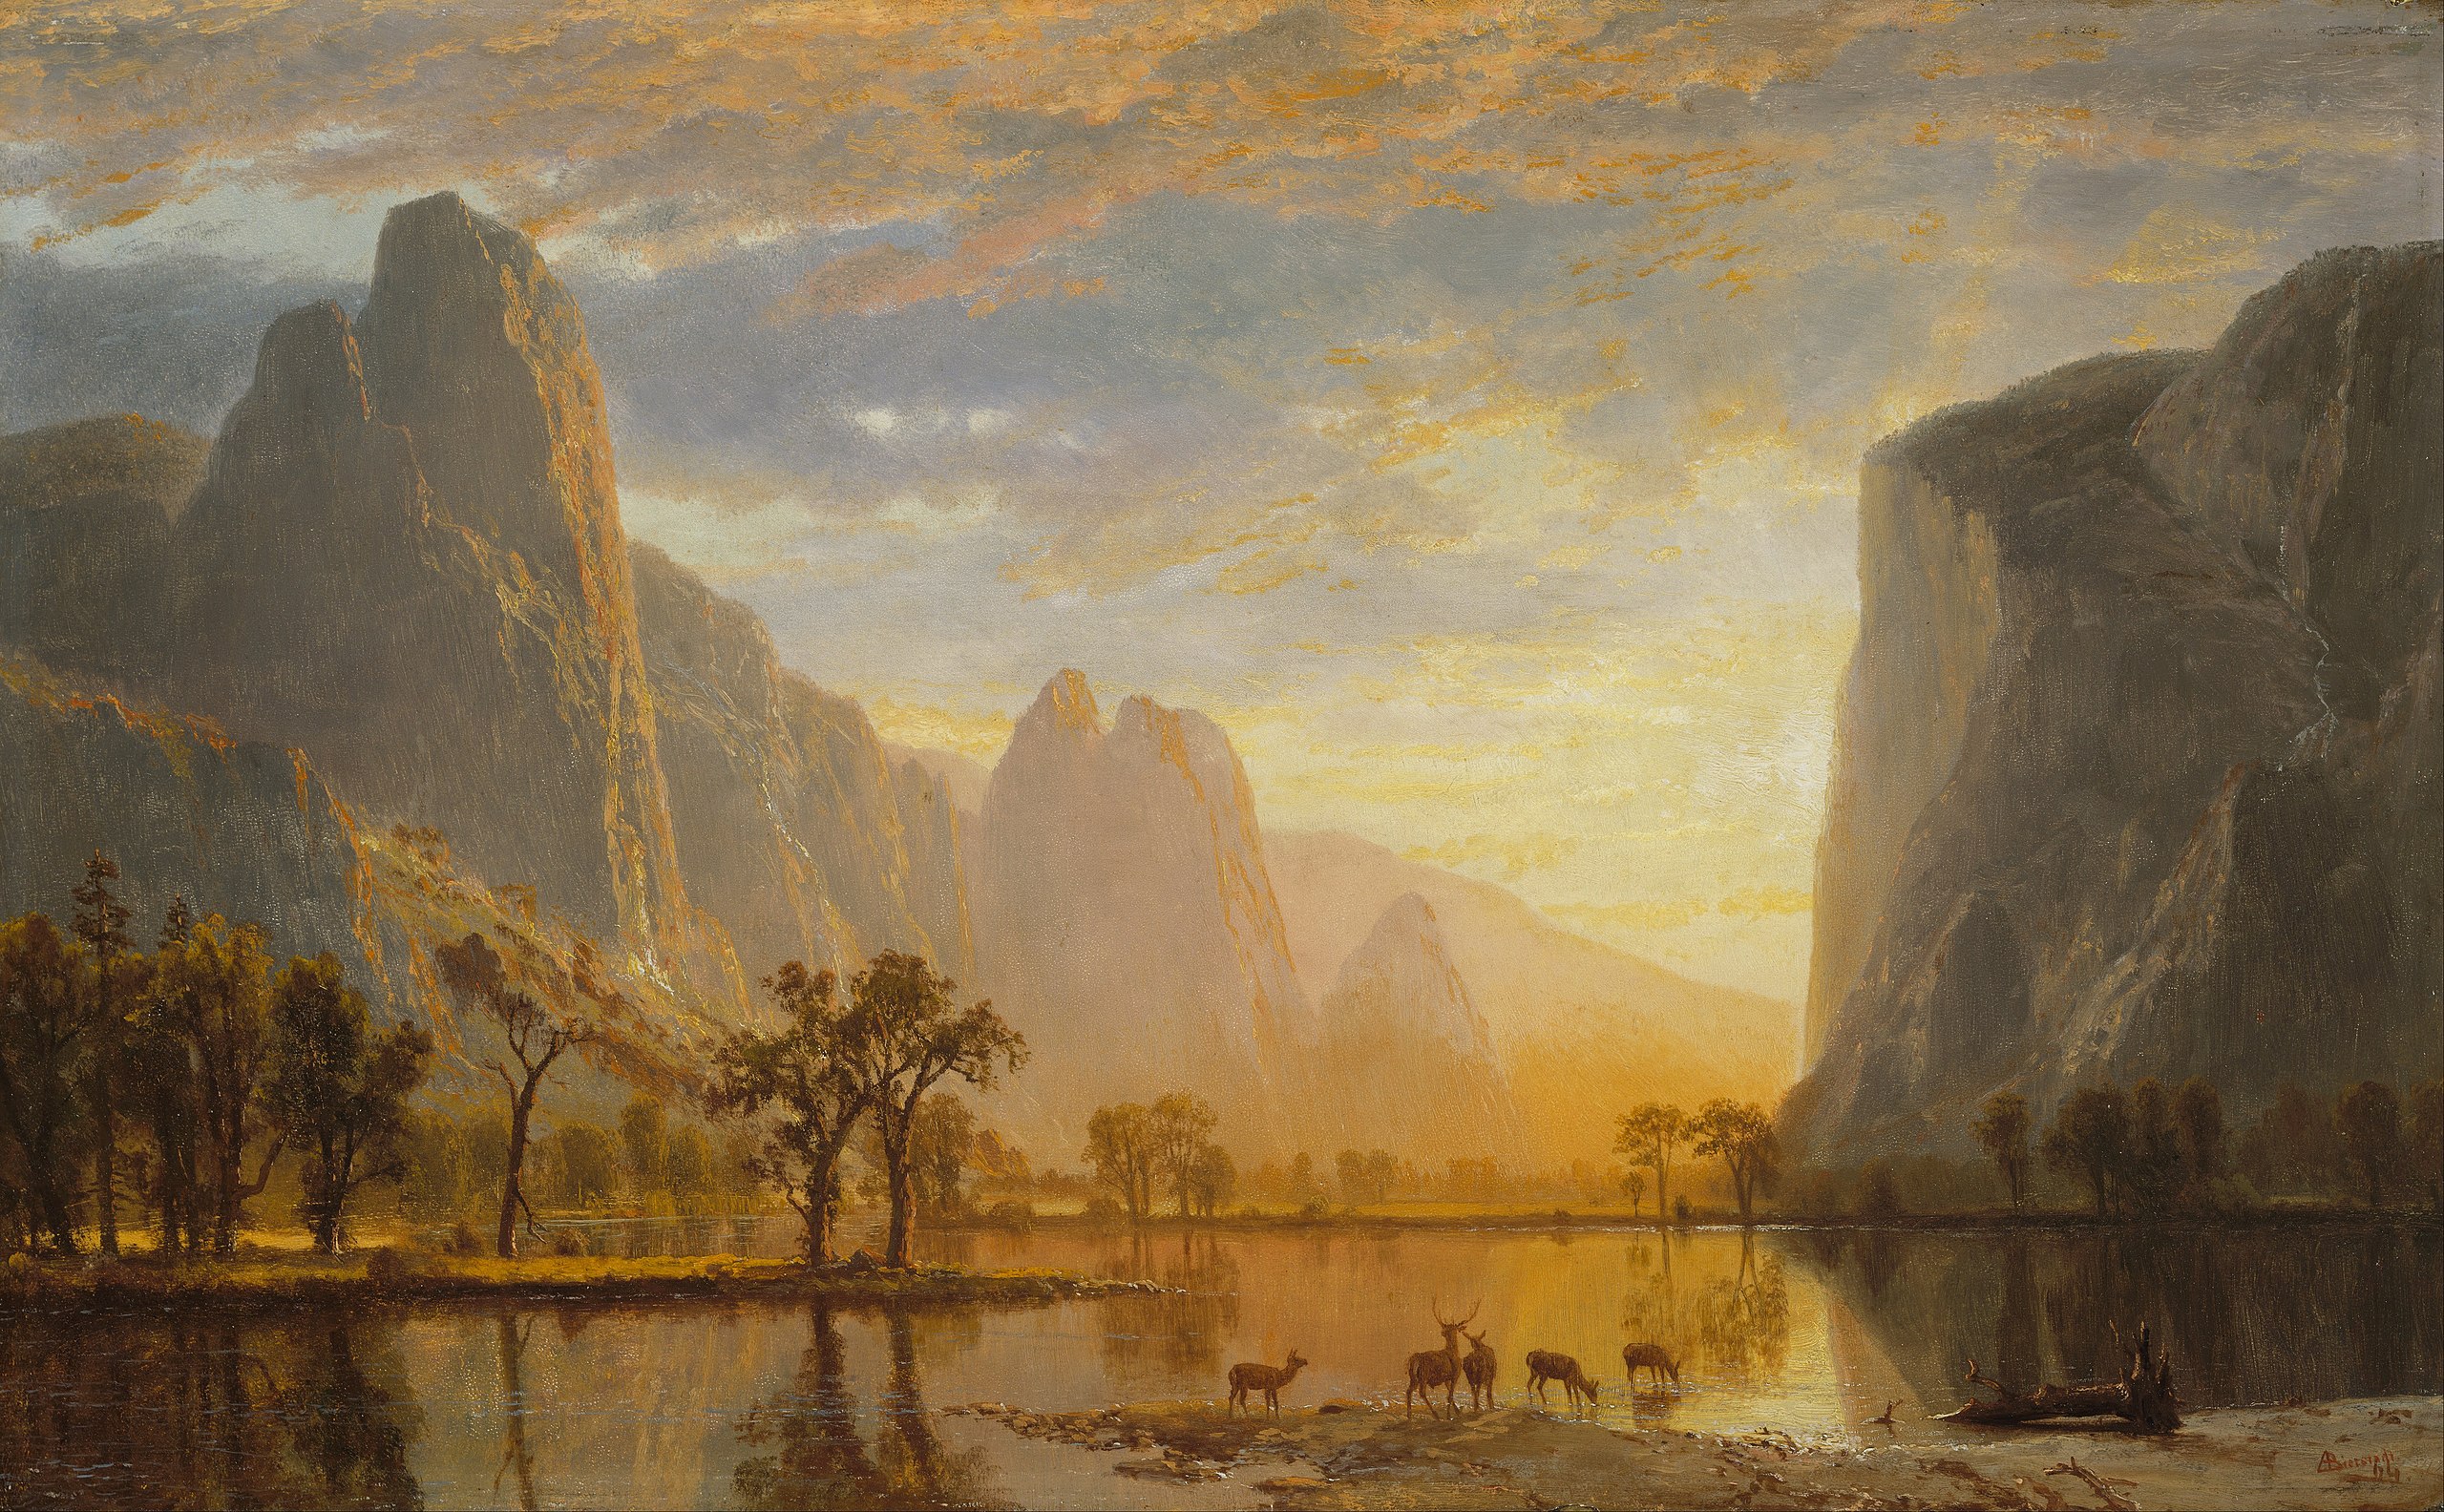 Vallée du Yosemite by Albert Bierstadt - 1864 - 30.16 x 48.89 cm 